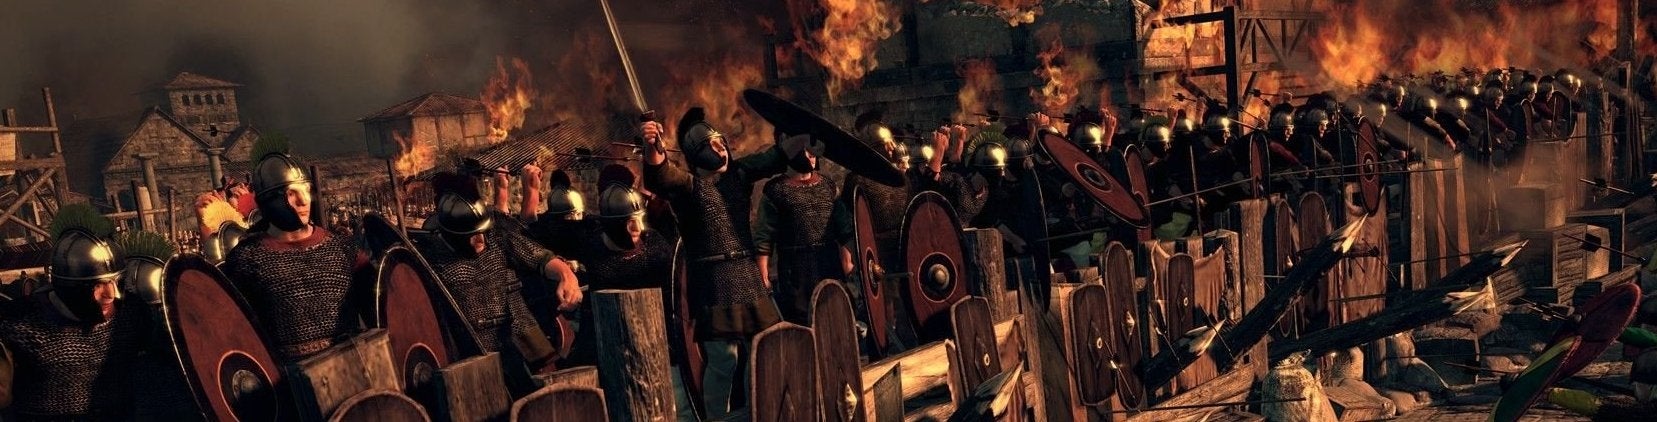 Obrazki dla Total War: Attila - Recenzja